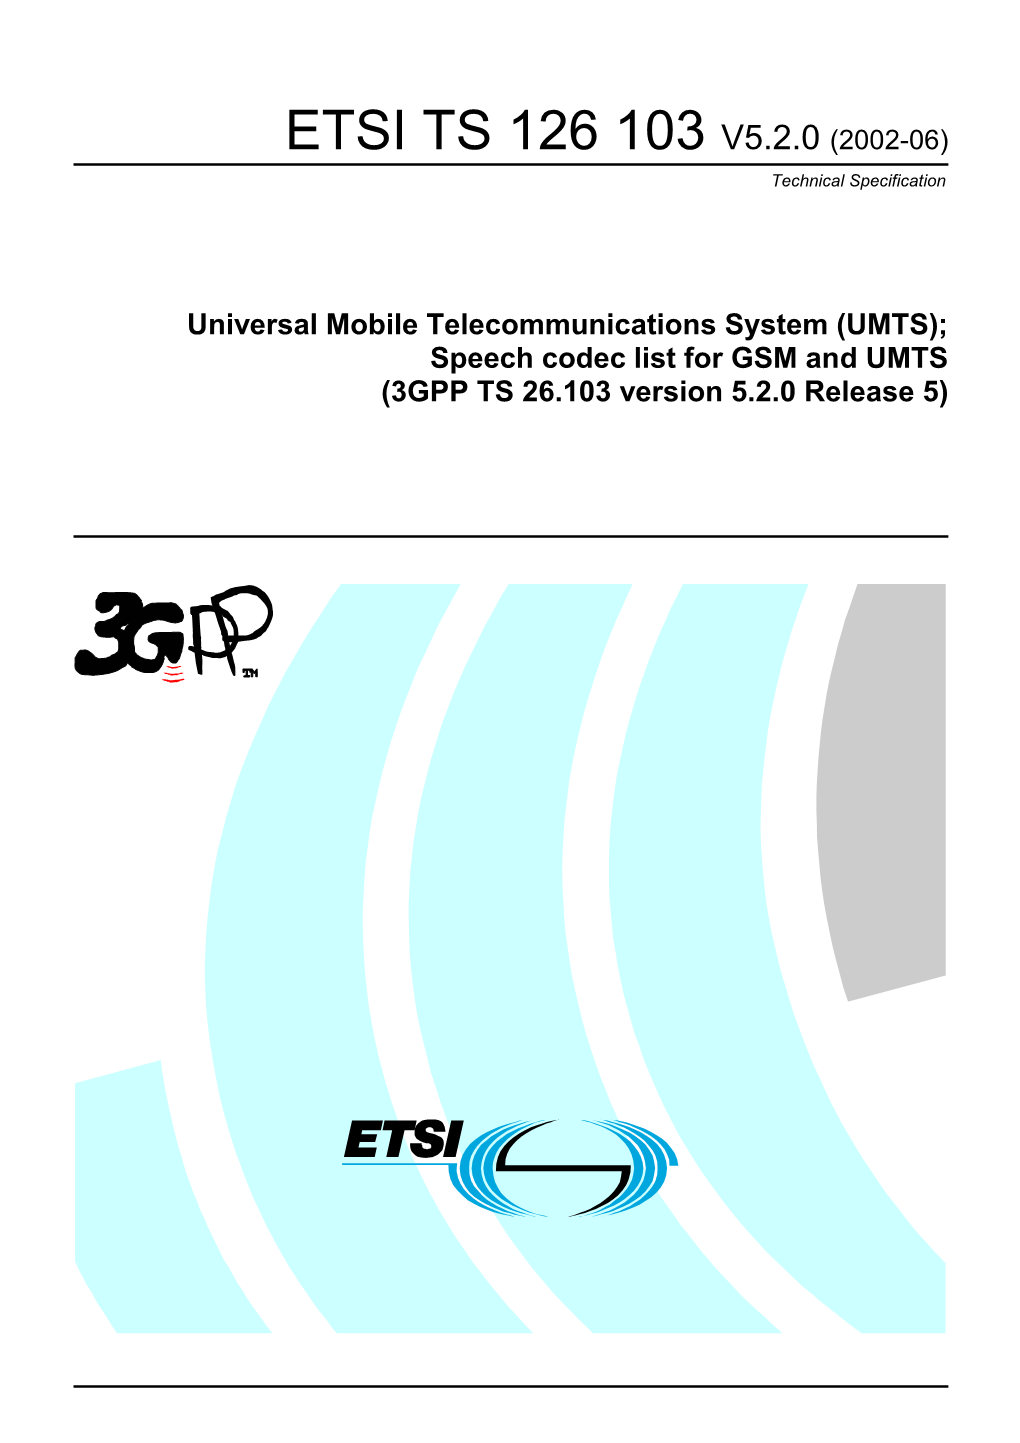 TS 126 103 V5.2.0 (2002-06) Technical Specification